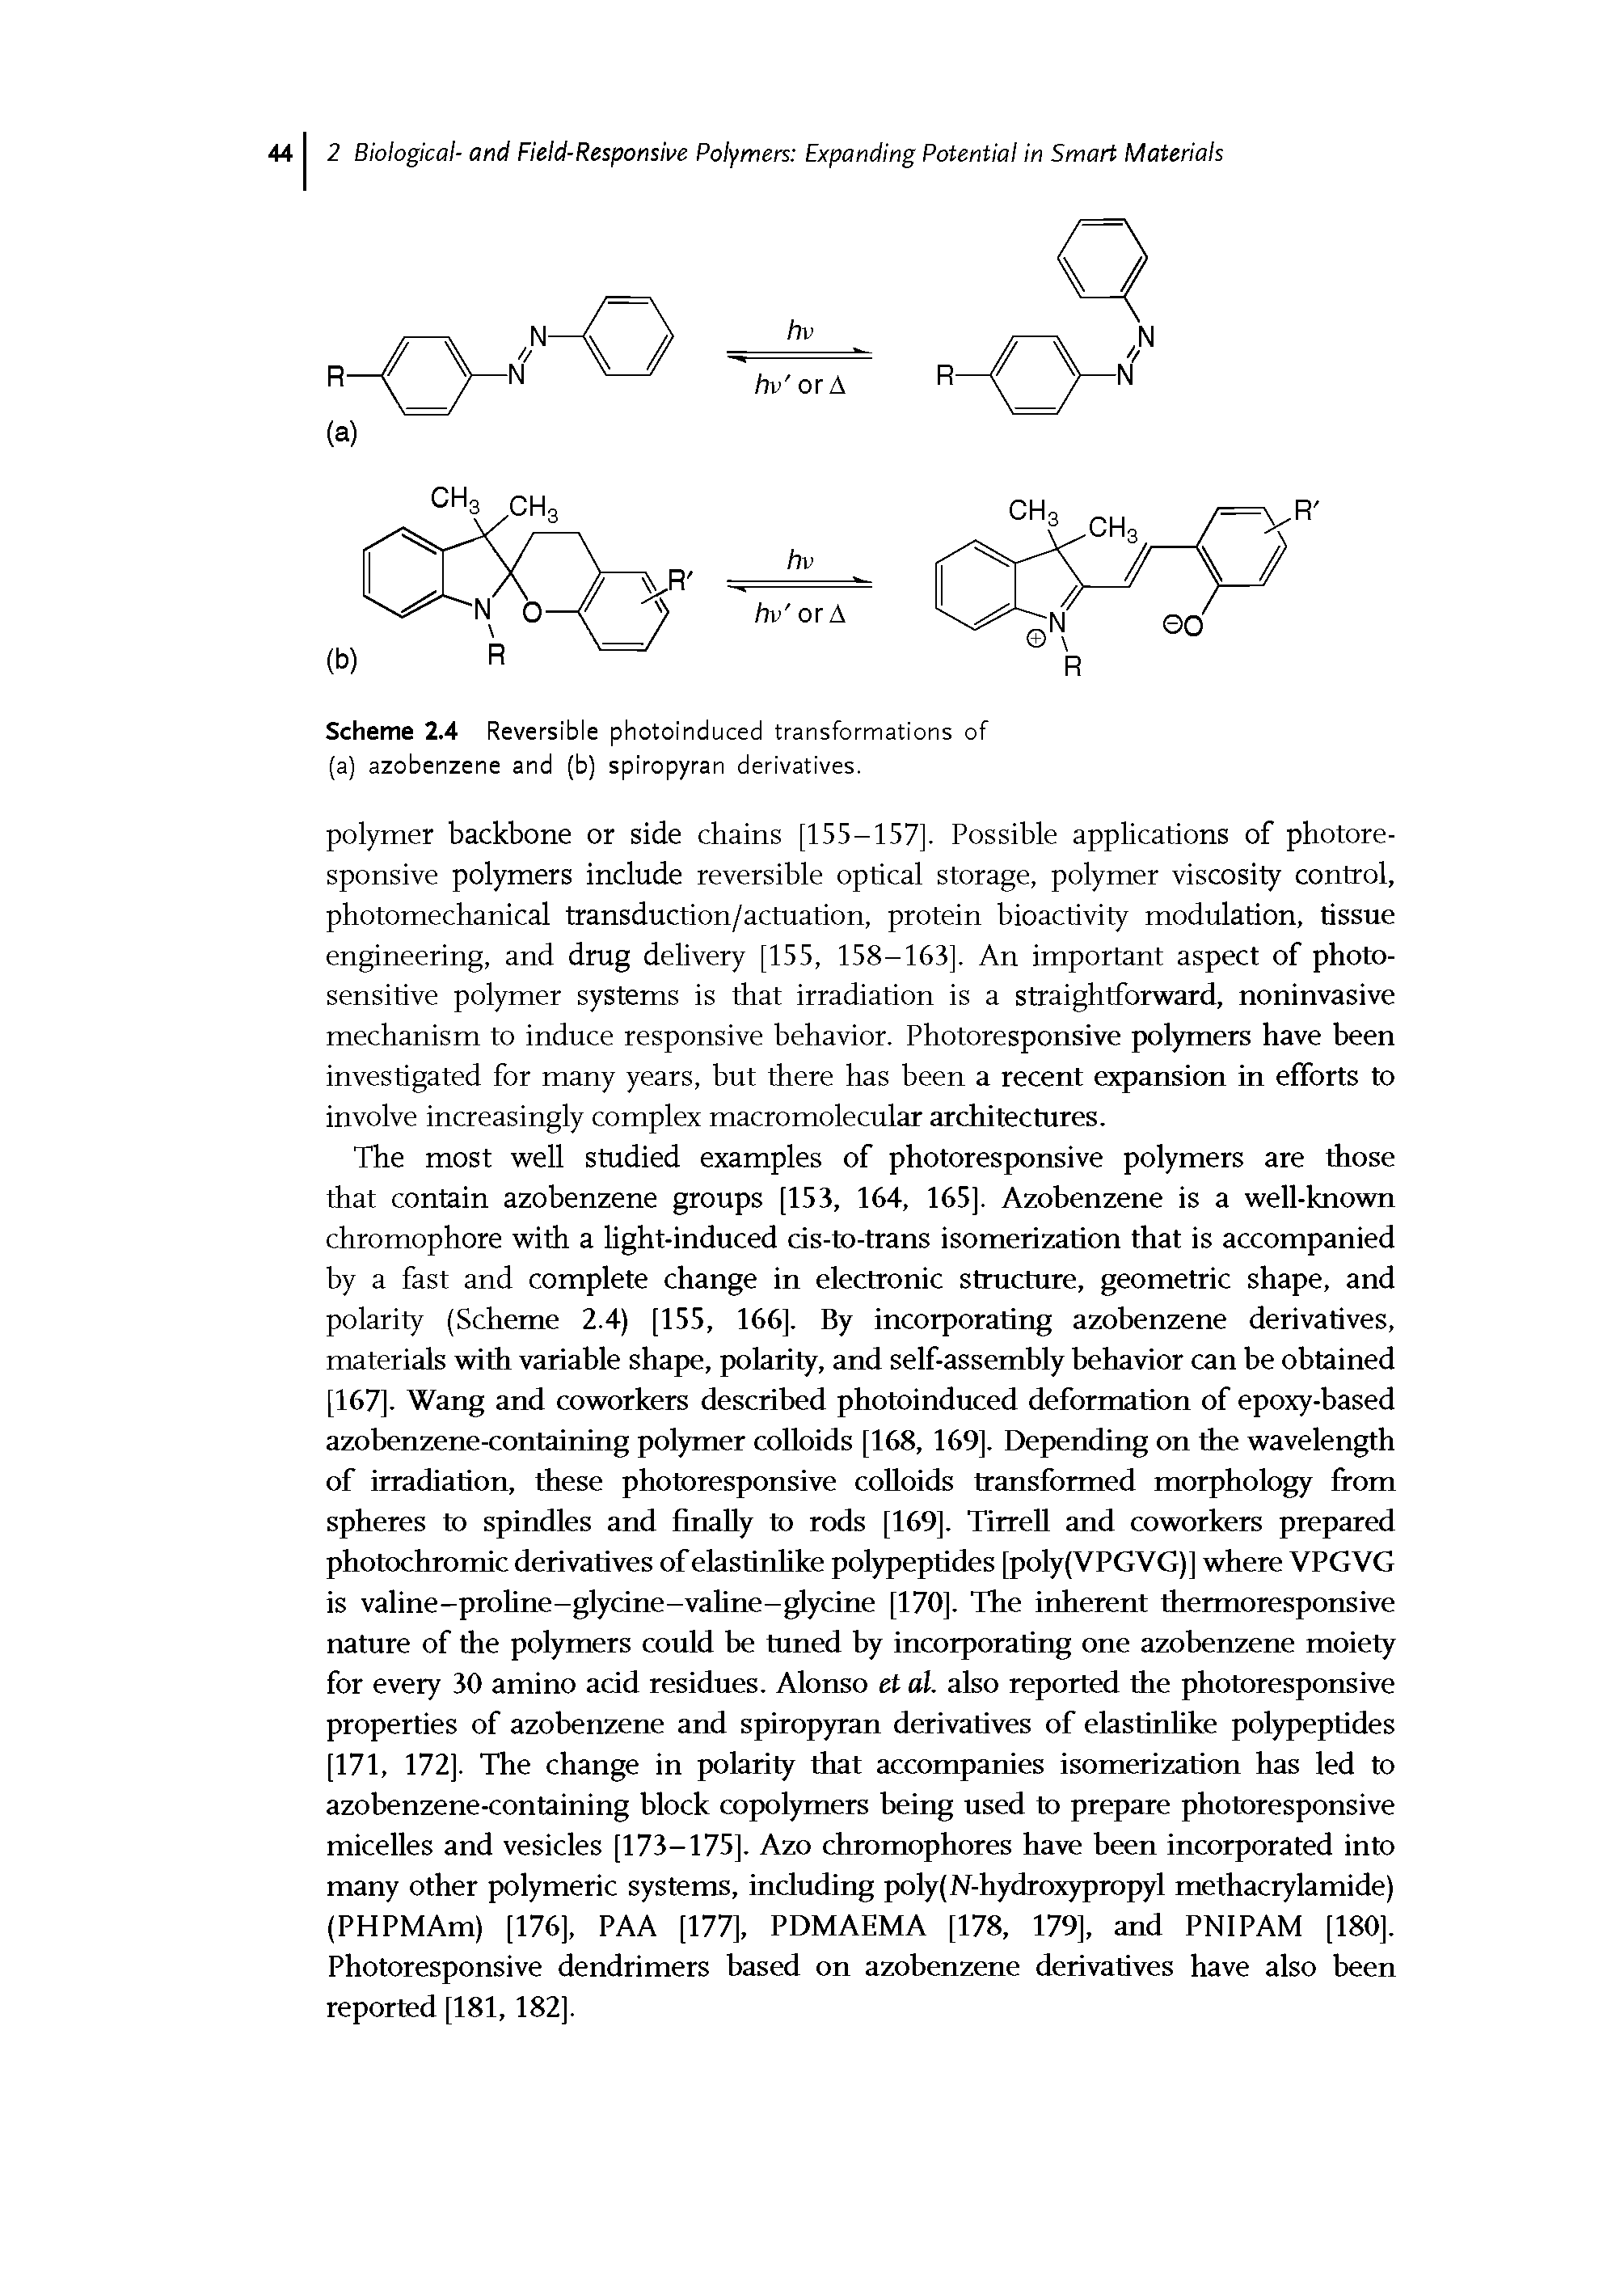 Scheme 2.4 Reversible photoinduced transformations of (a) azobenzene and (b) spiropyran derivatives.